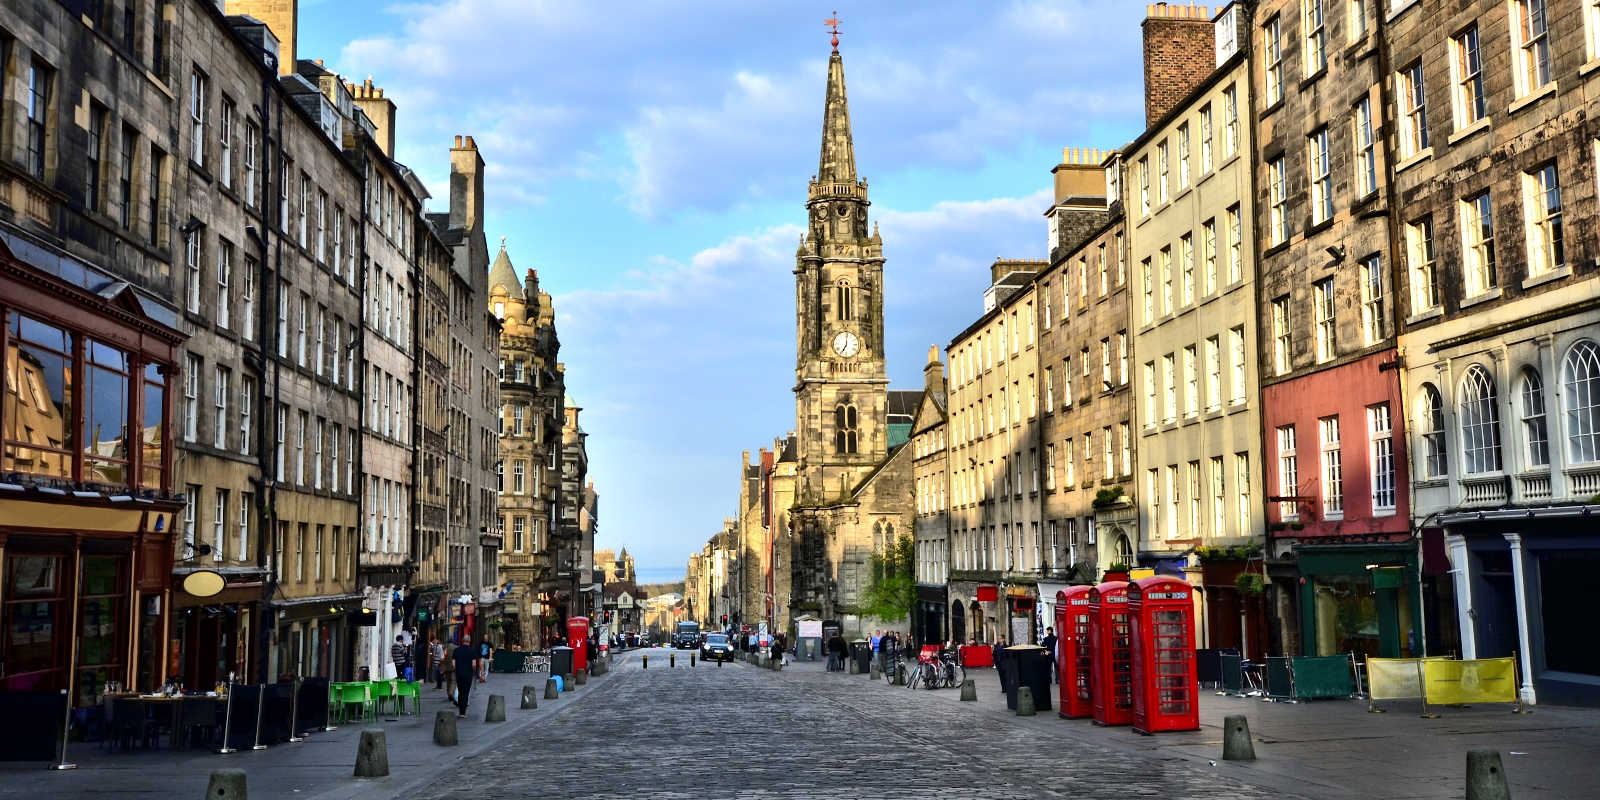 View down the Royal Mile cobbled street in Edinburgh